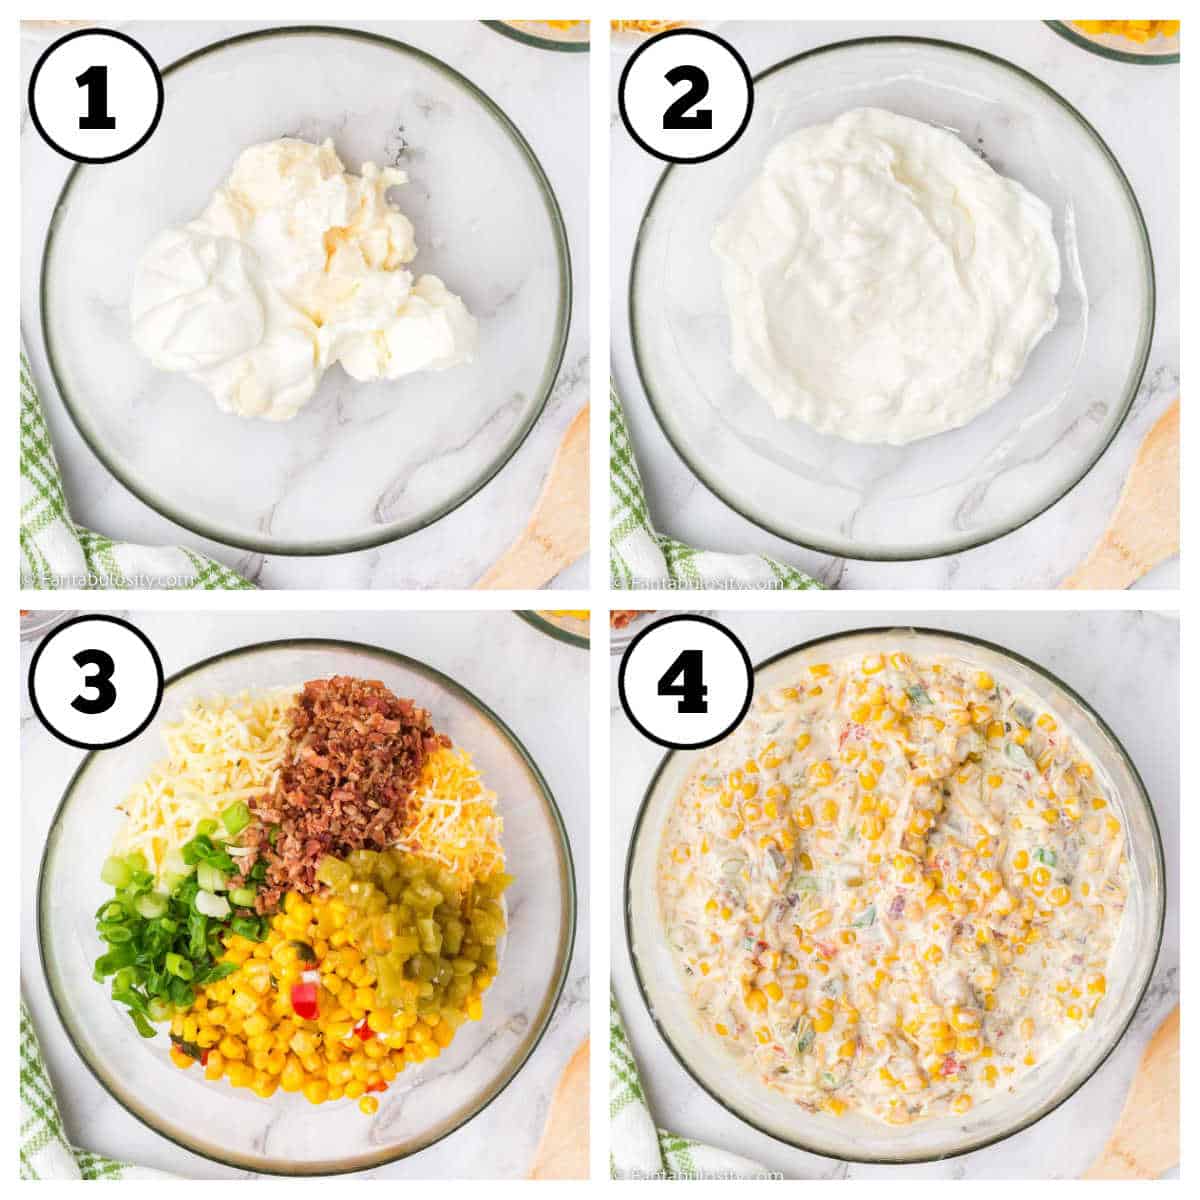 Steps 1-4 of making crack corn dip.